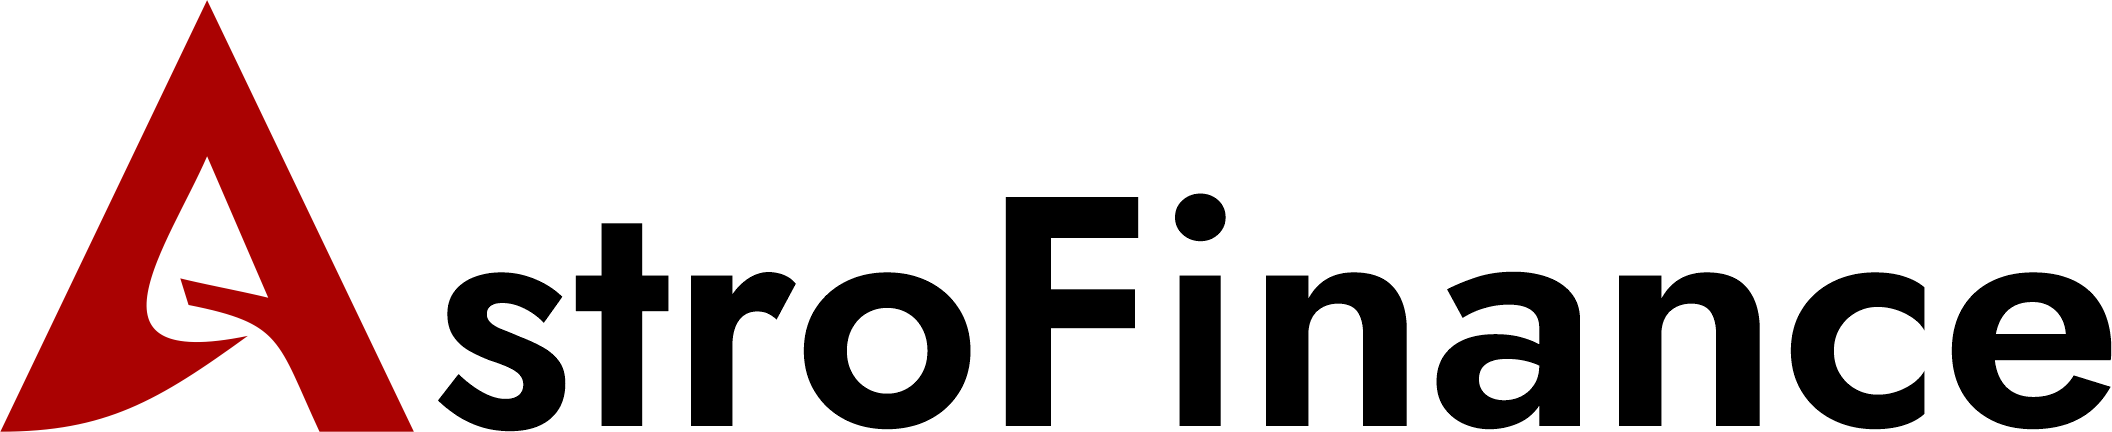 logo_astrofinance